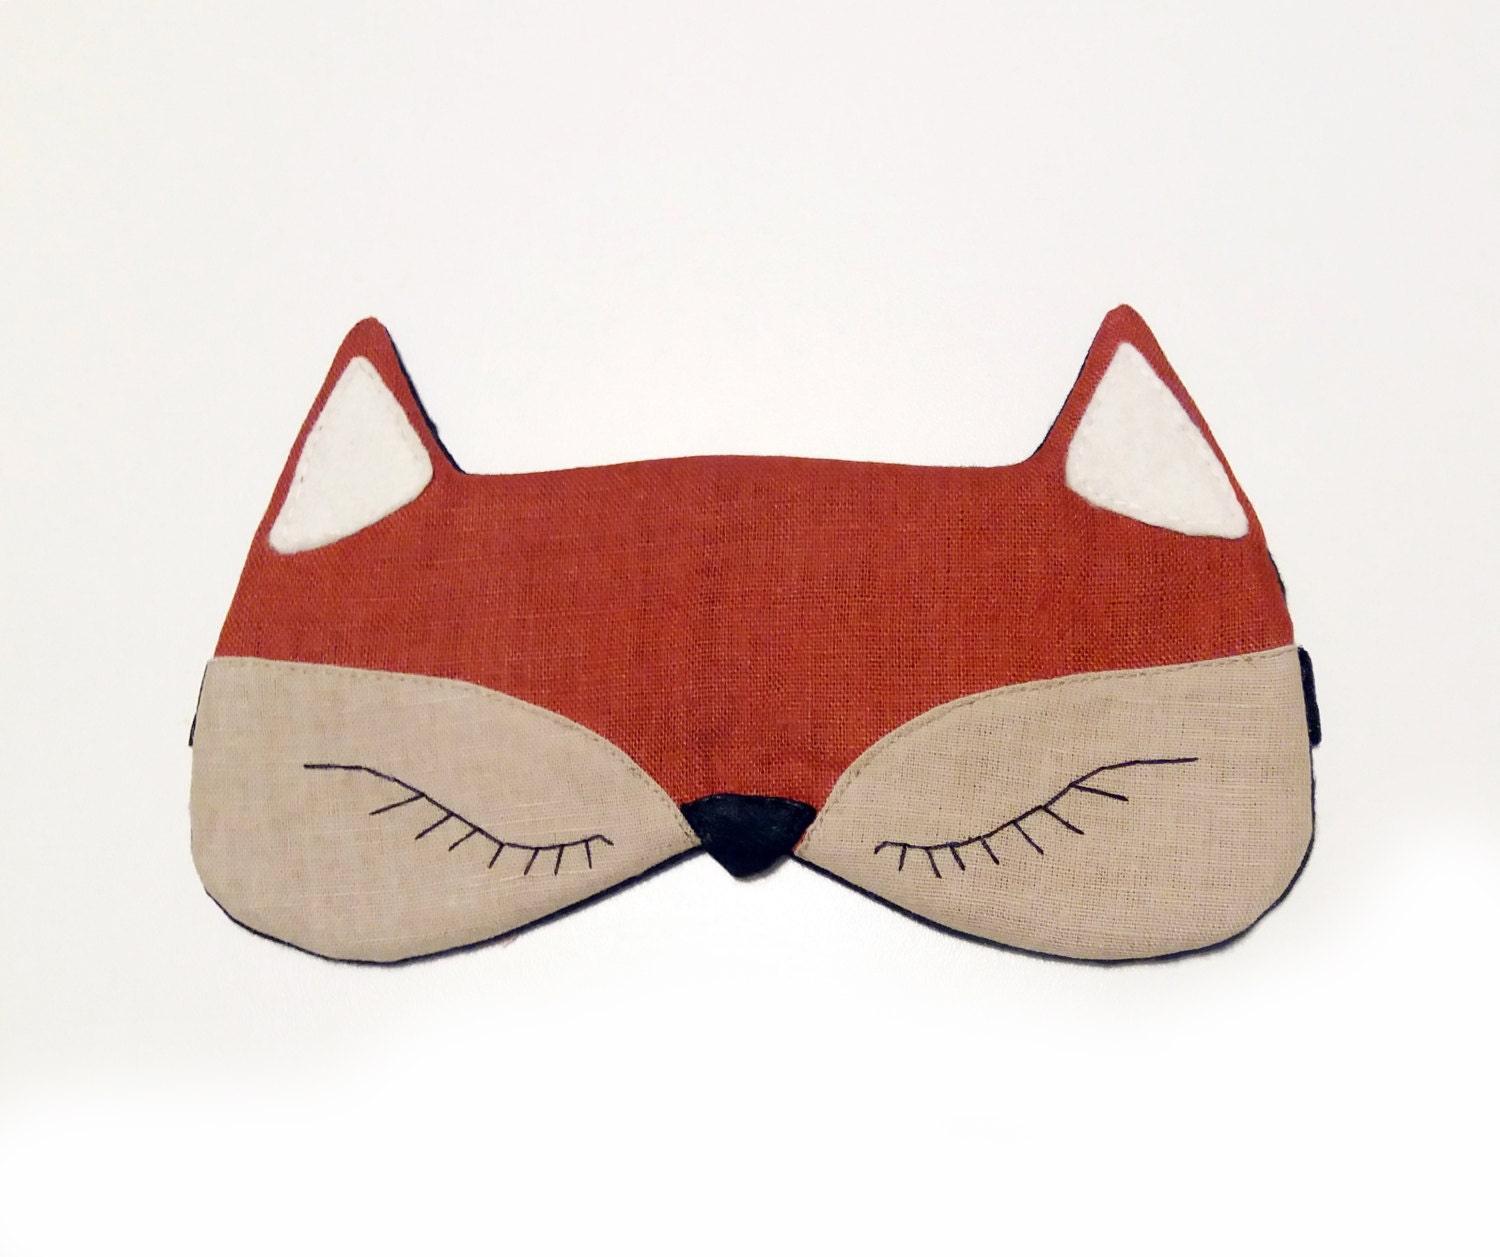 Cute Sleeping Eye Mask Plush Blindfold Travel Sleep Masks Soft Funny Eye  Cover for Kids Girls and Adult 